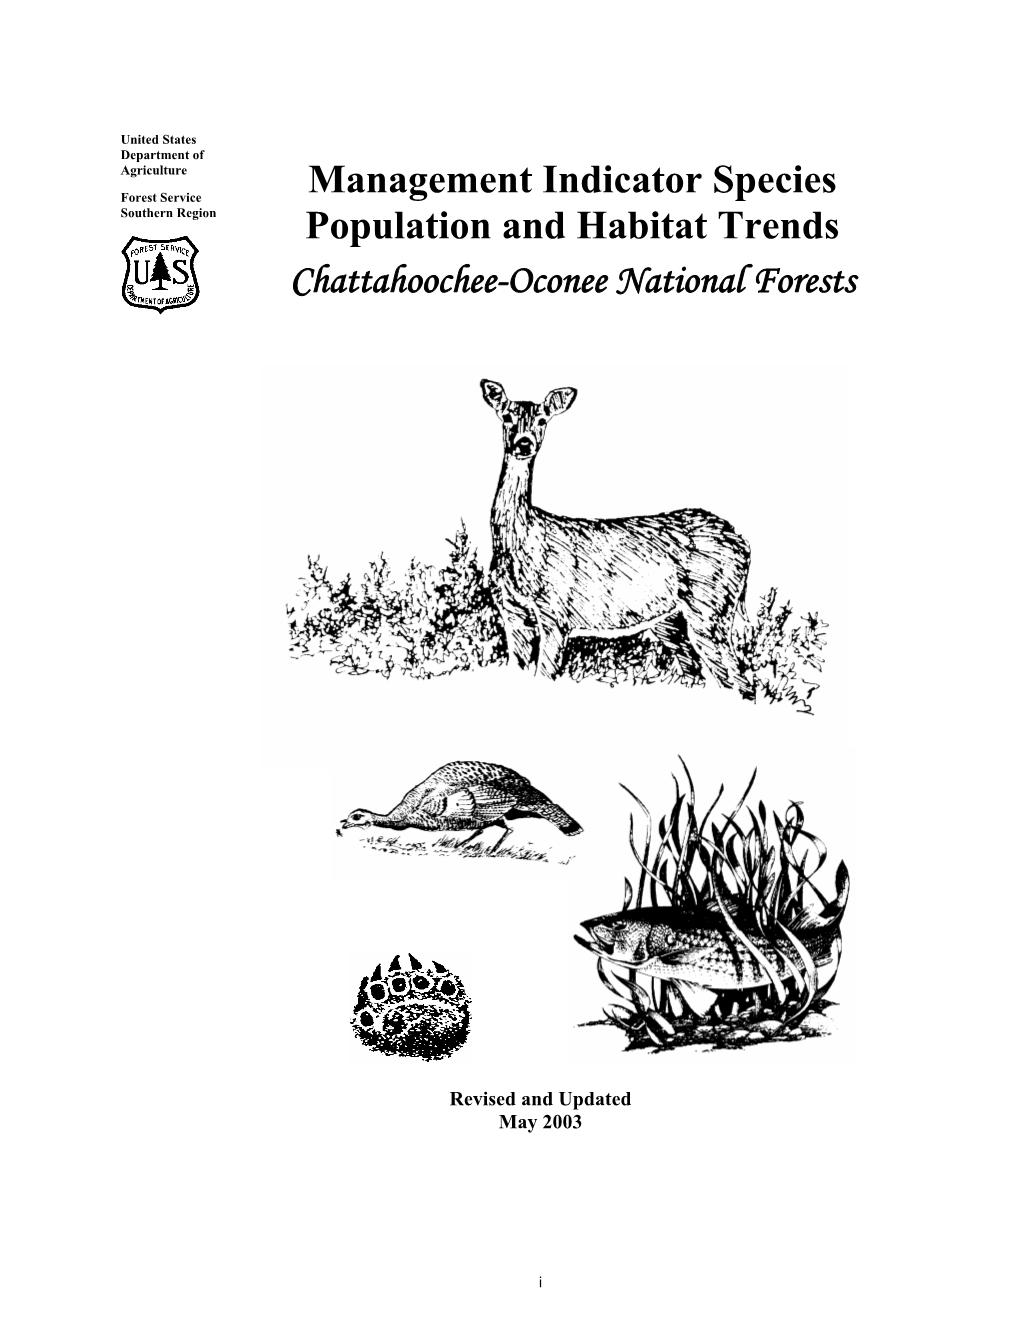 Management Indicator Species Population and Habitat Trends